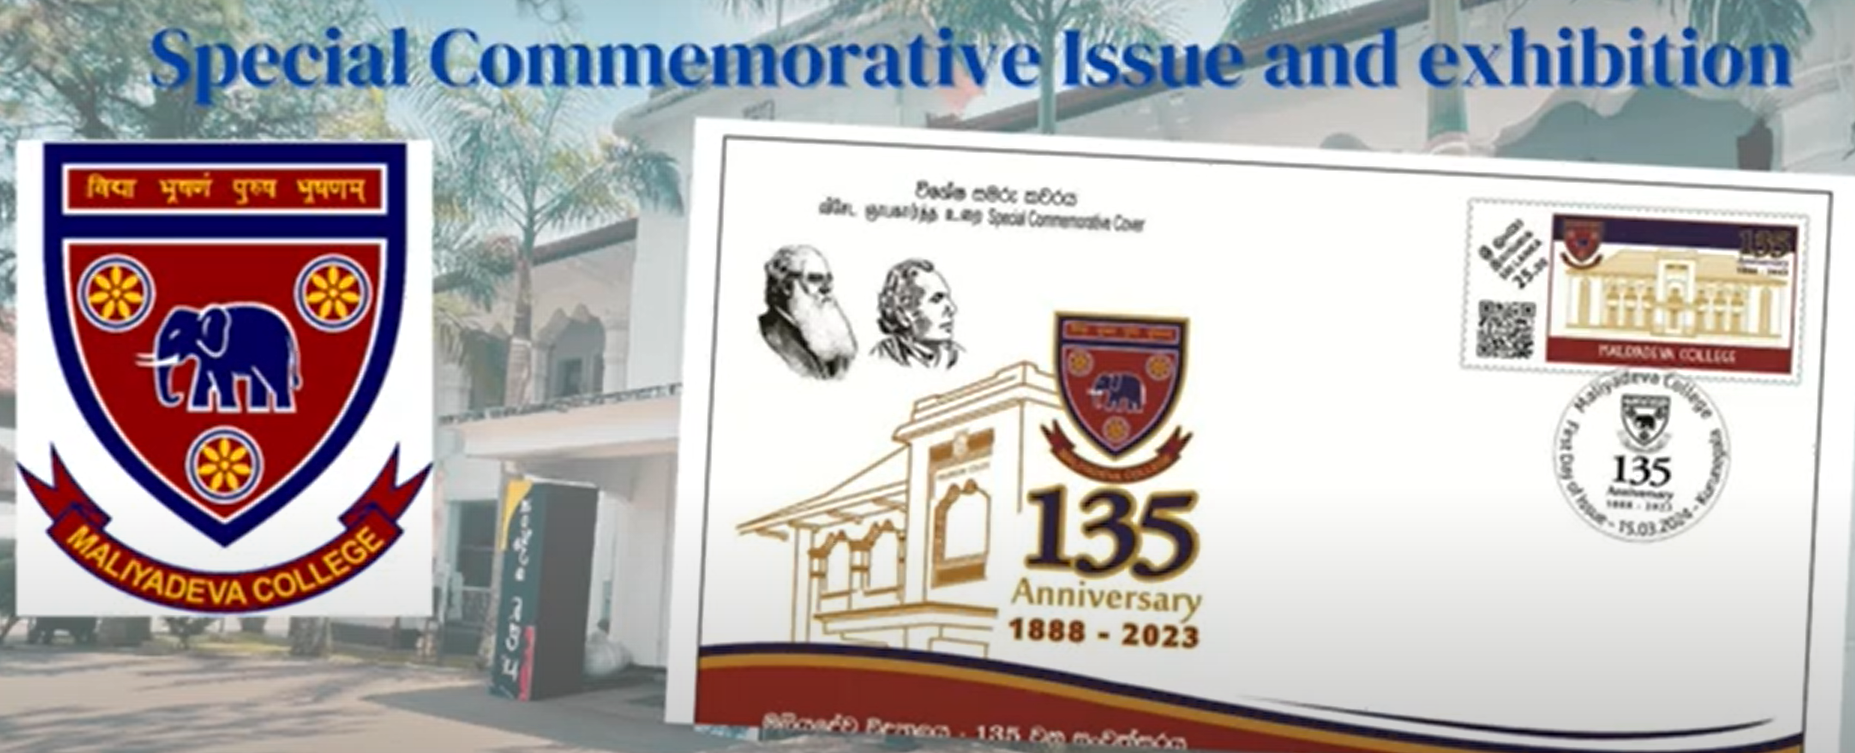 Video – 135th Anniversary of Maliyadeva College